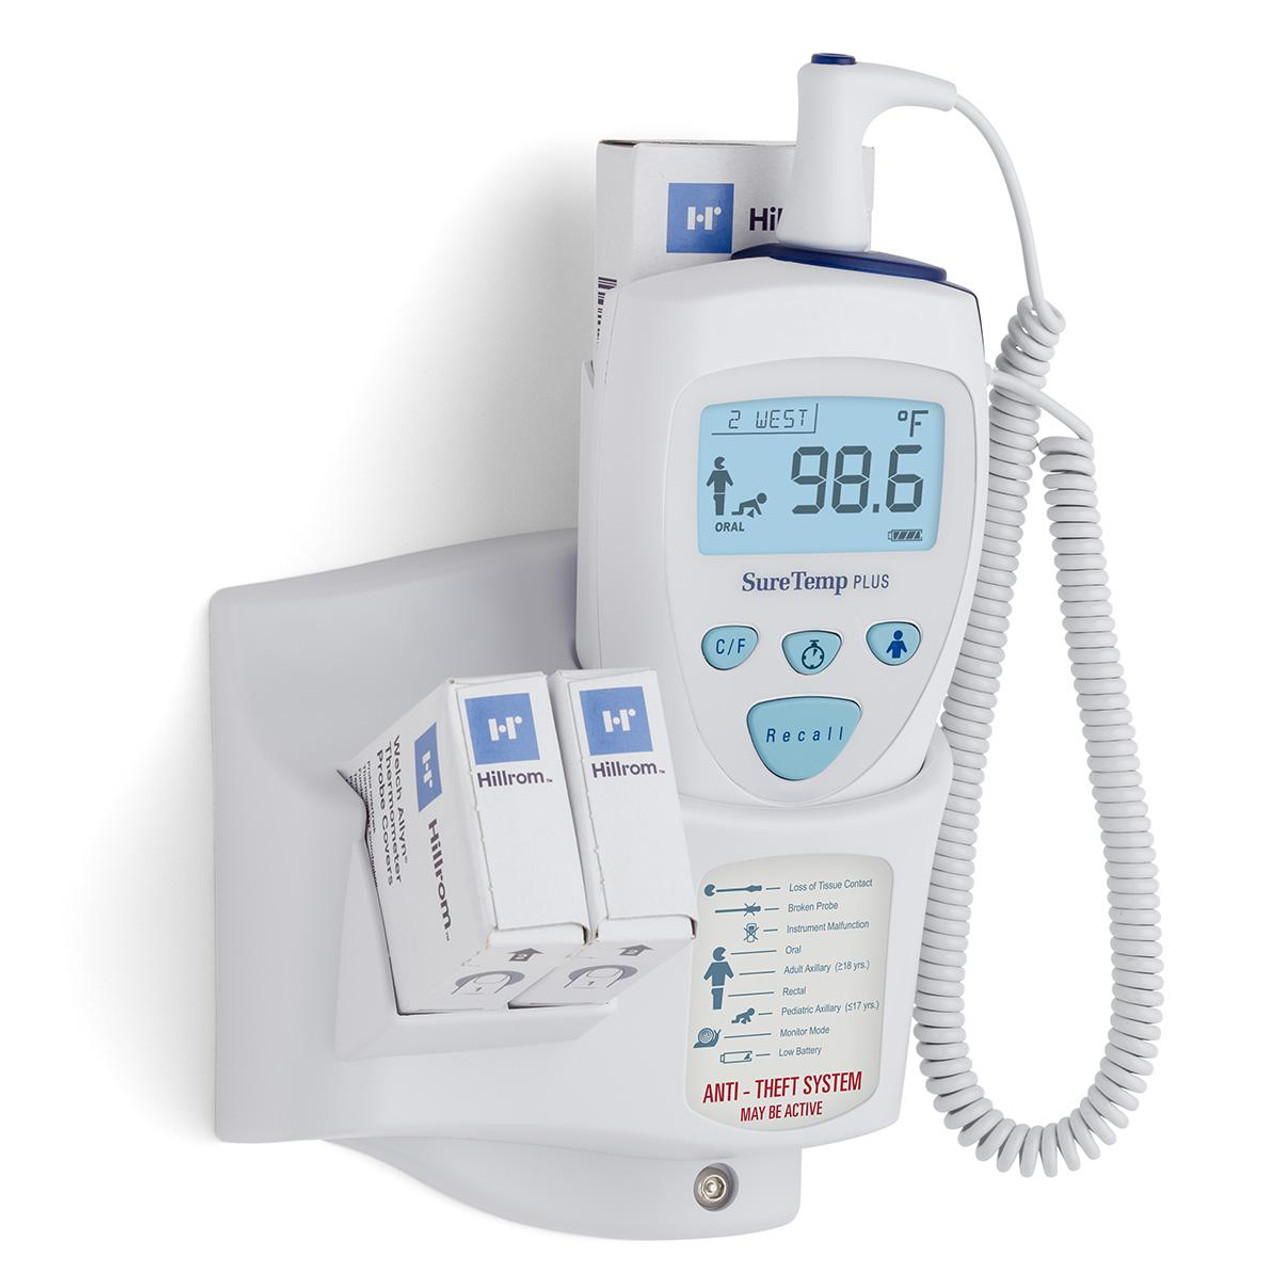 Braun thermomètre rectal digital (4022167200099) - Pharmacie de la Thu